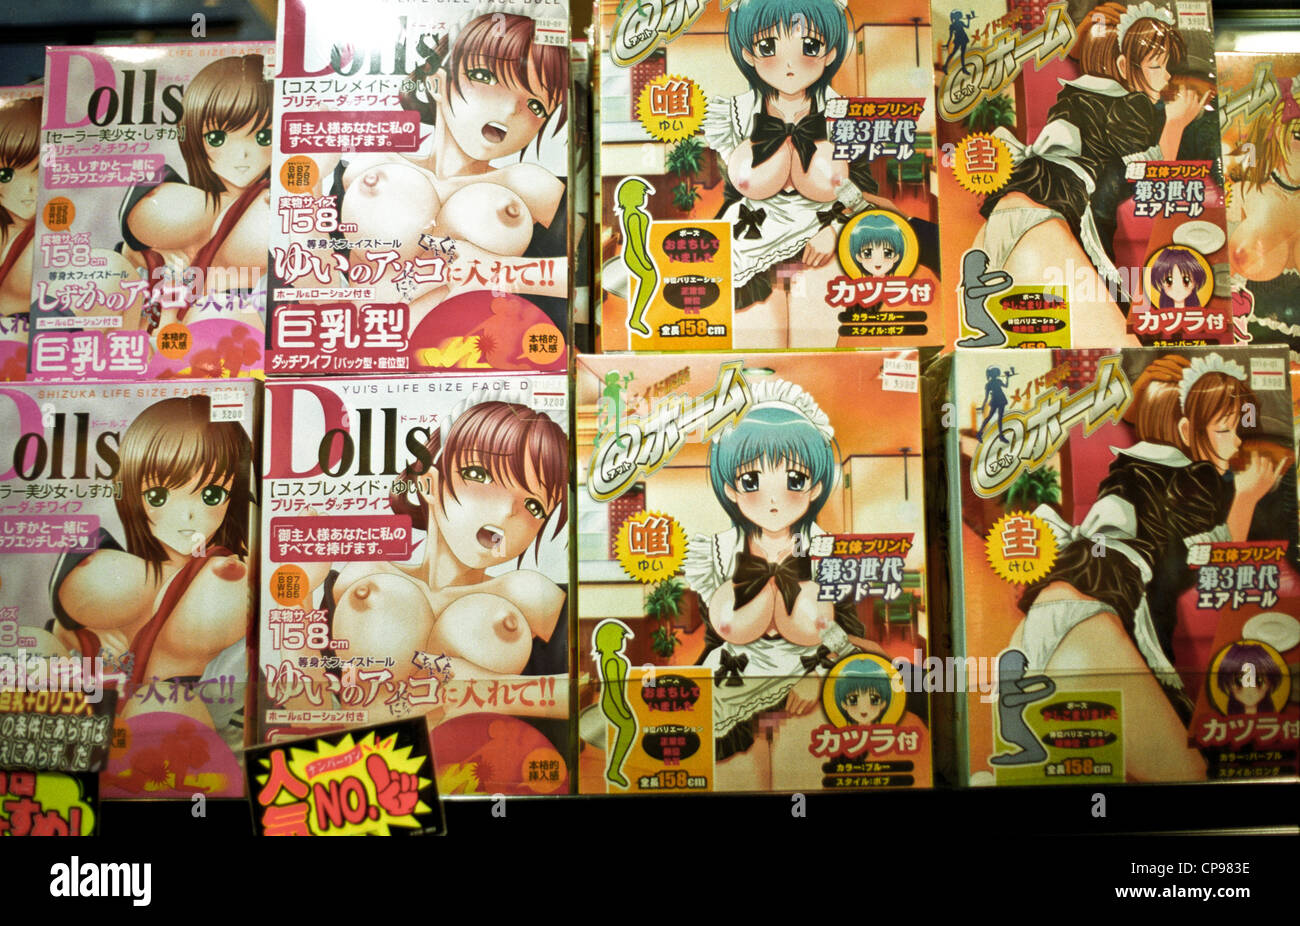 porn magazine Japan